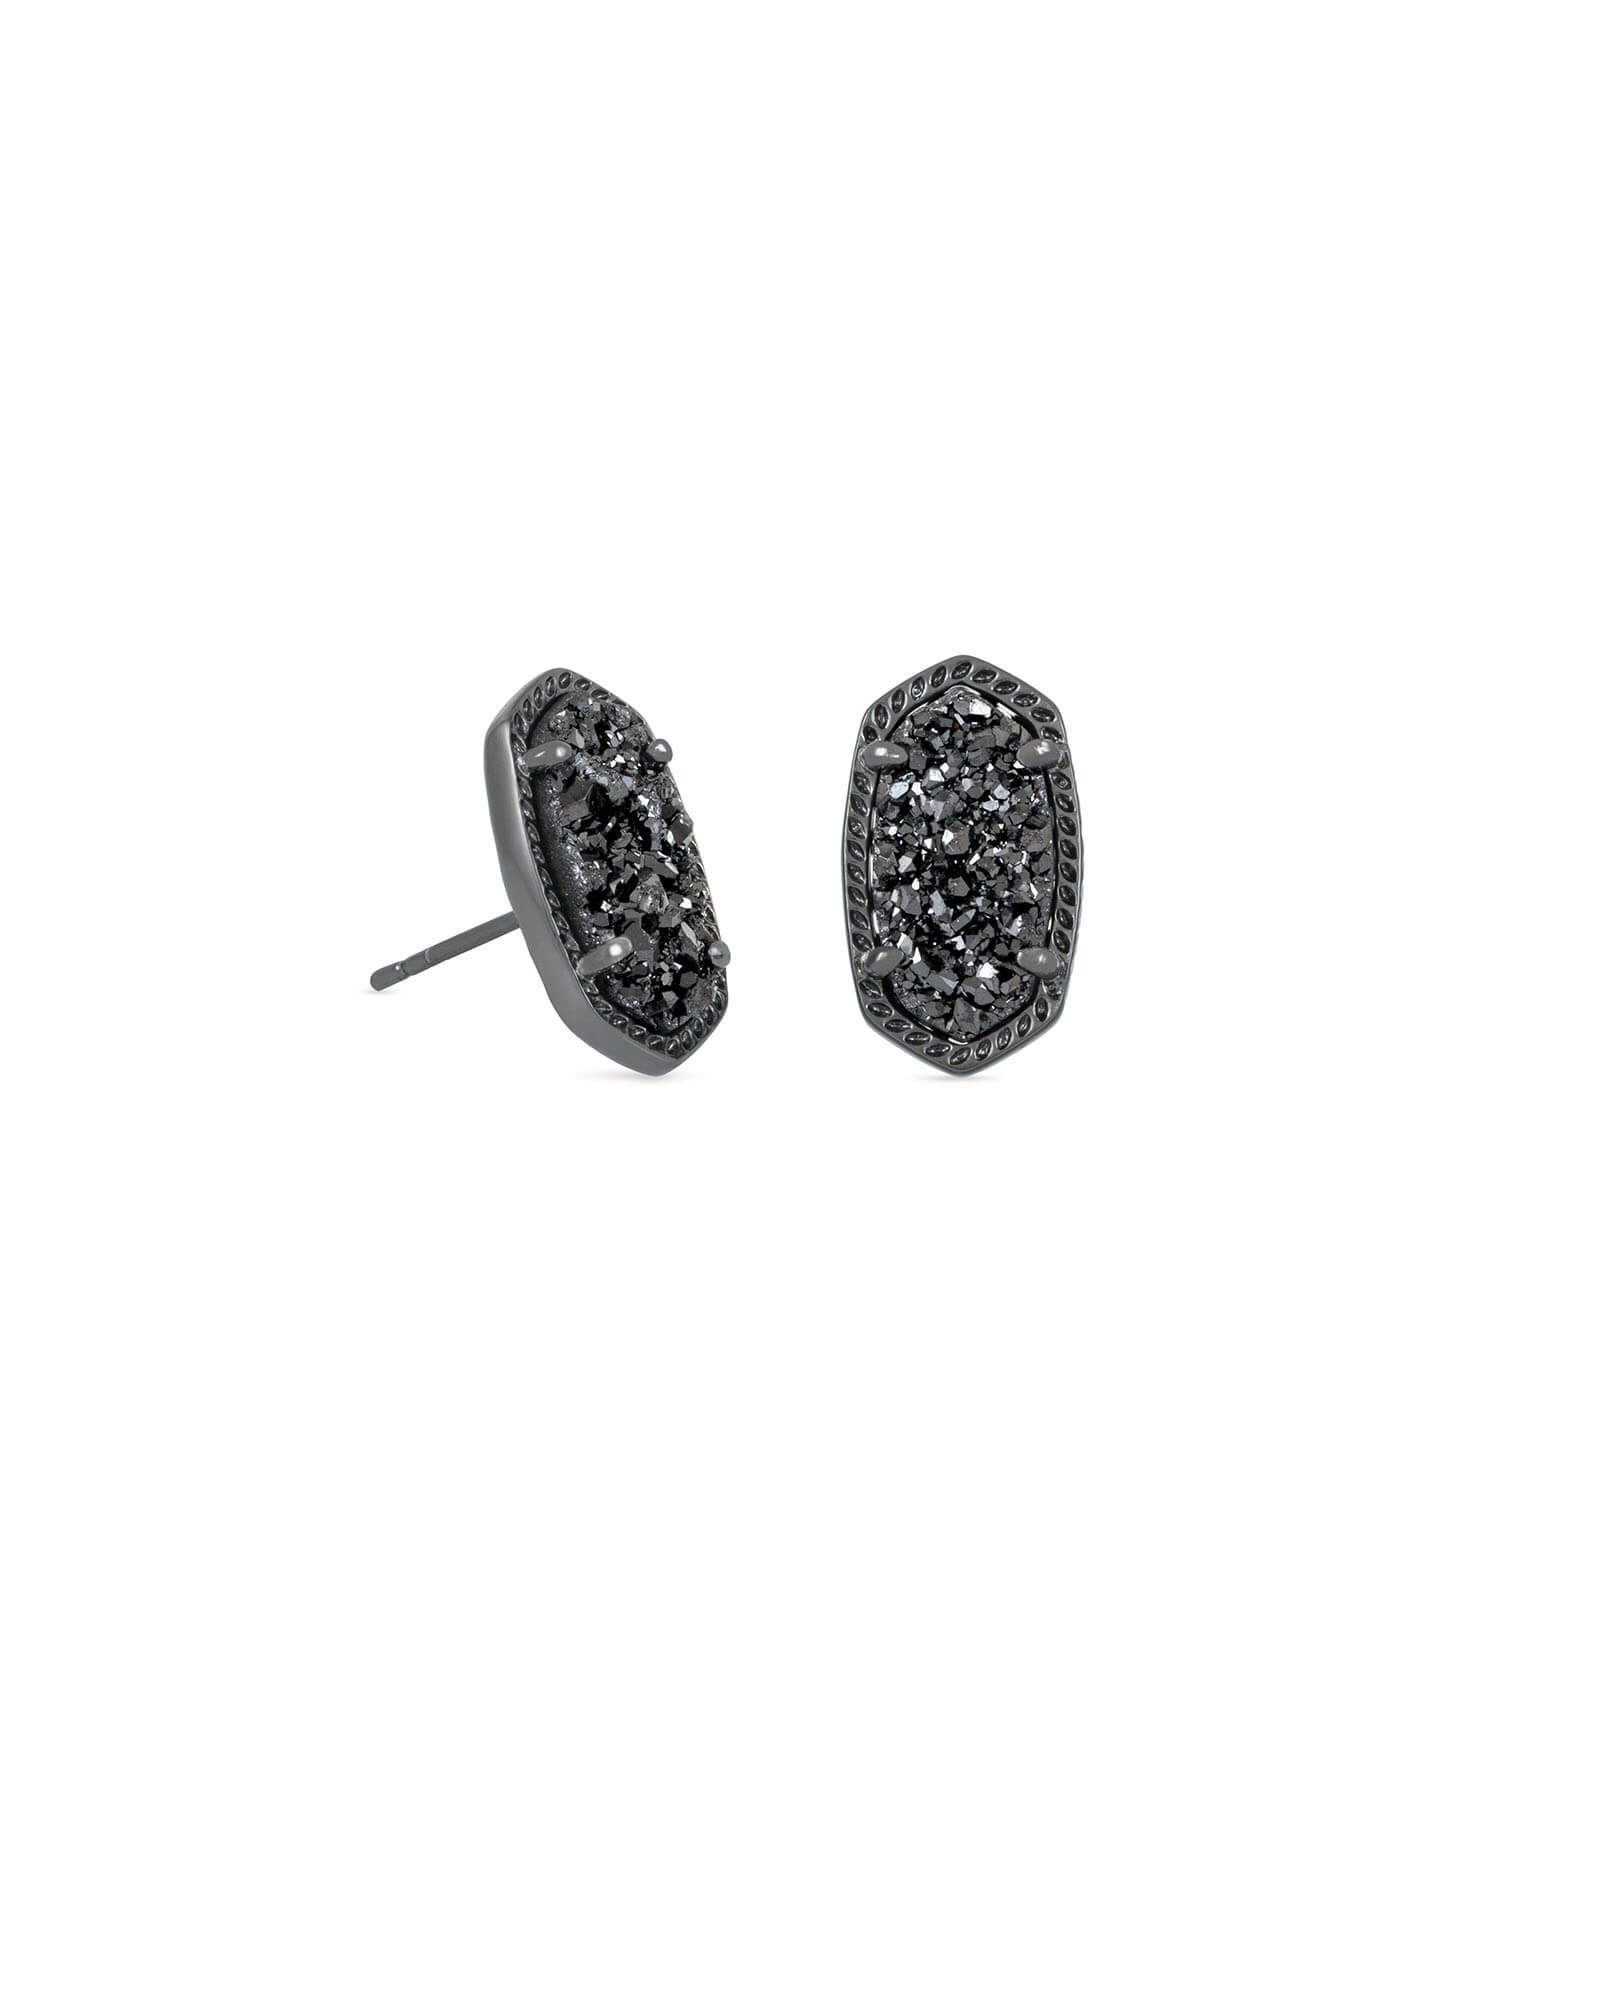 Ellie Gunmetal Stud Earrings in Black Drusy | Kendra Scott